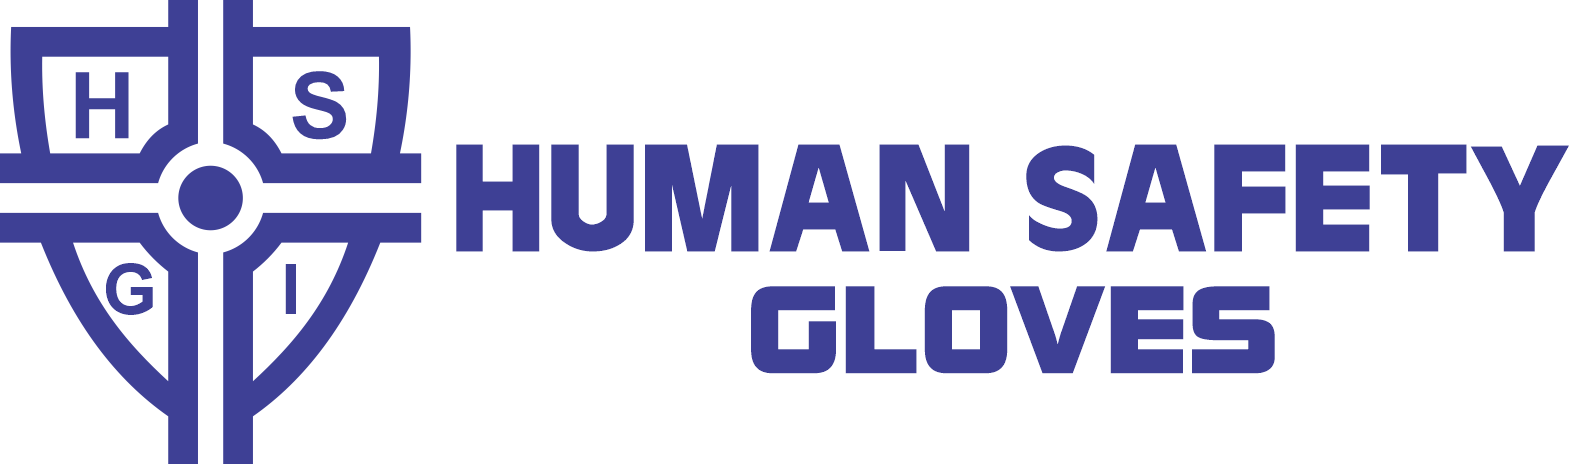 Human Safety Gloves